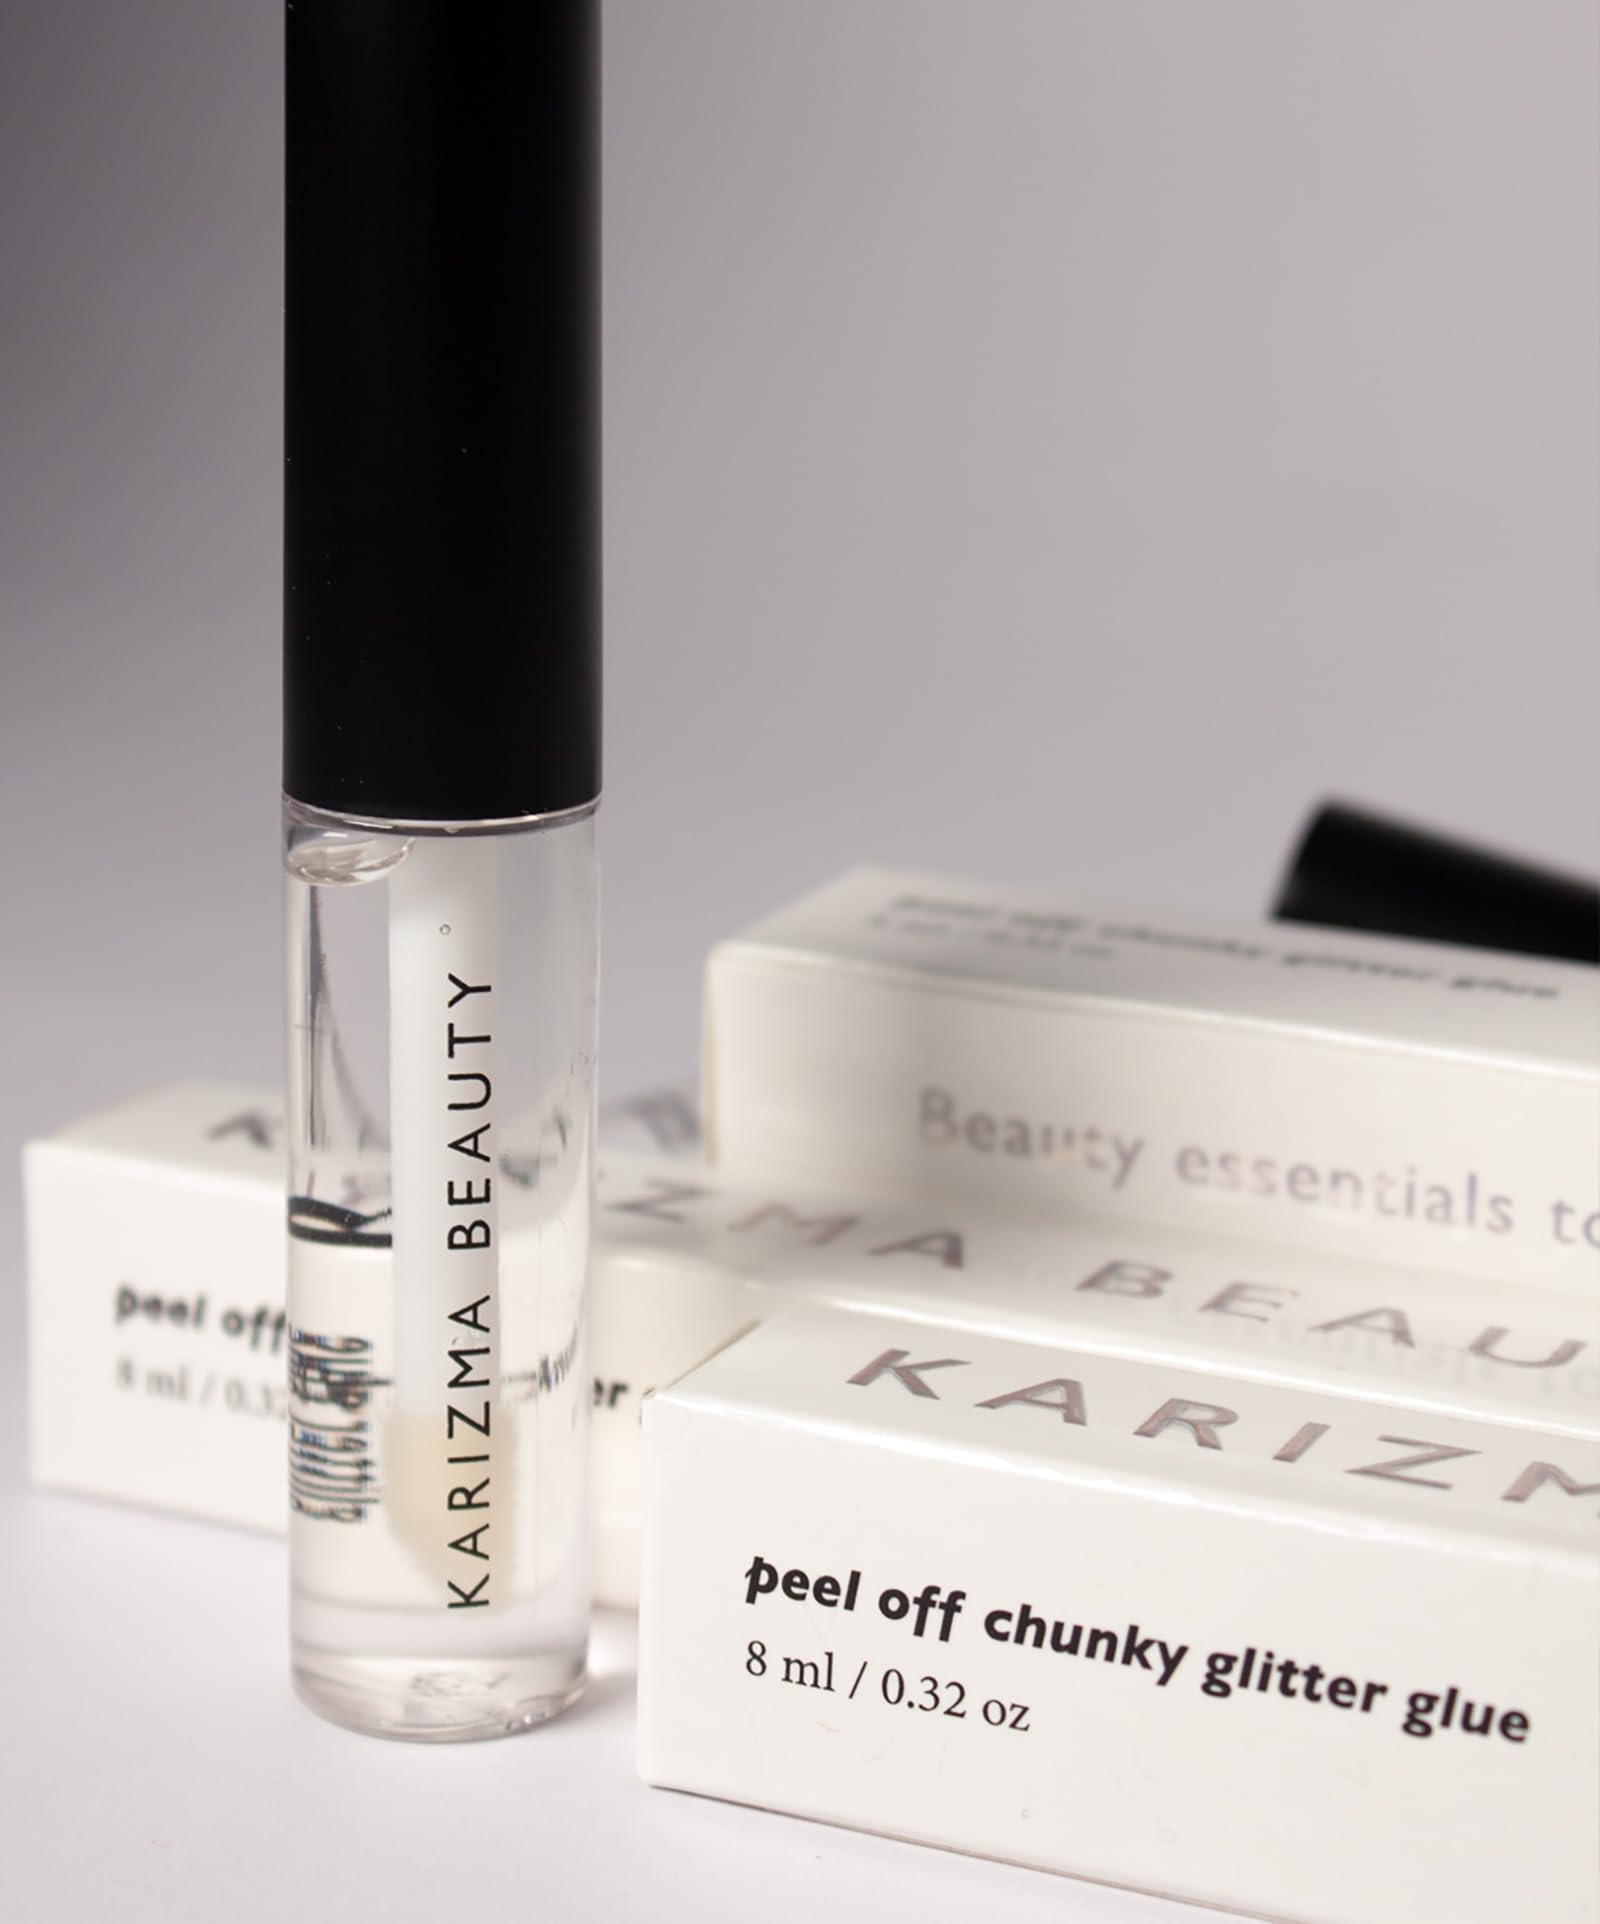 Cosmetic Glitter Glue // The Original Peel Off Formula ✮ KARIZMA Beauty ✮ Face Chunky Glitter Glue Adhesive Body Cosmetic Makeup Glitter Primer